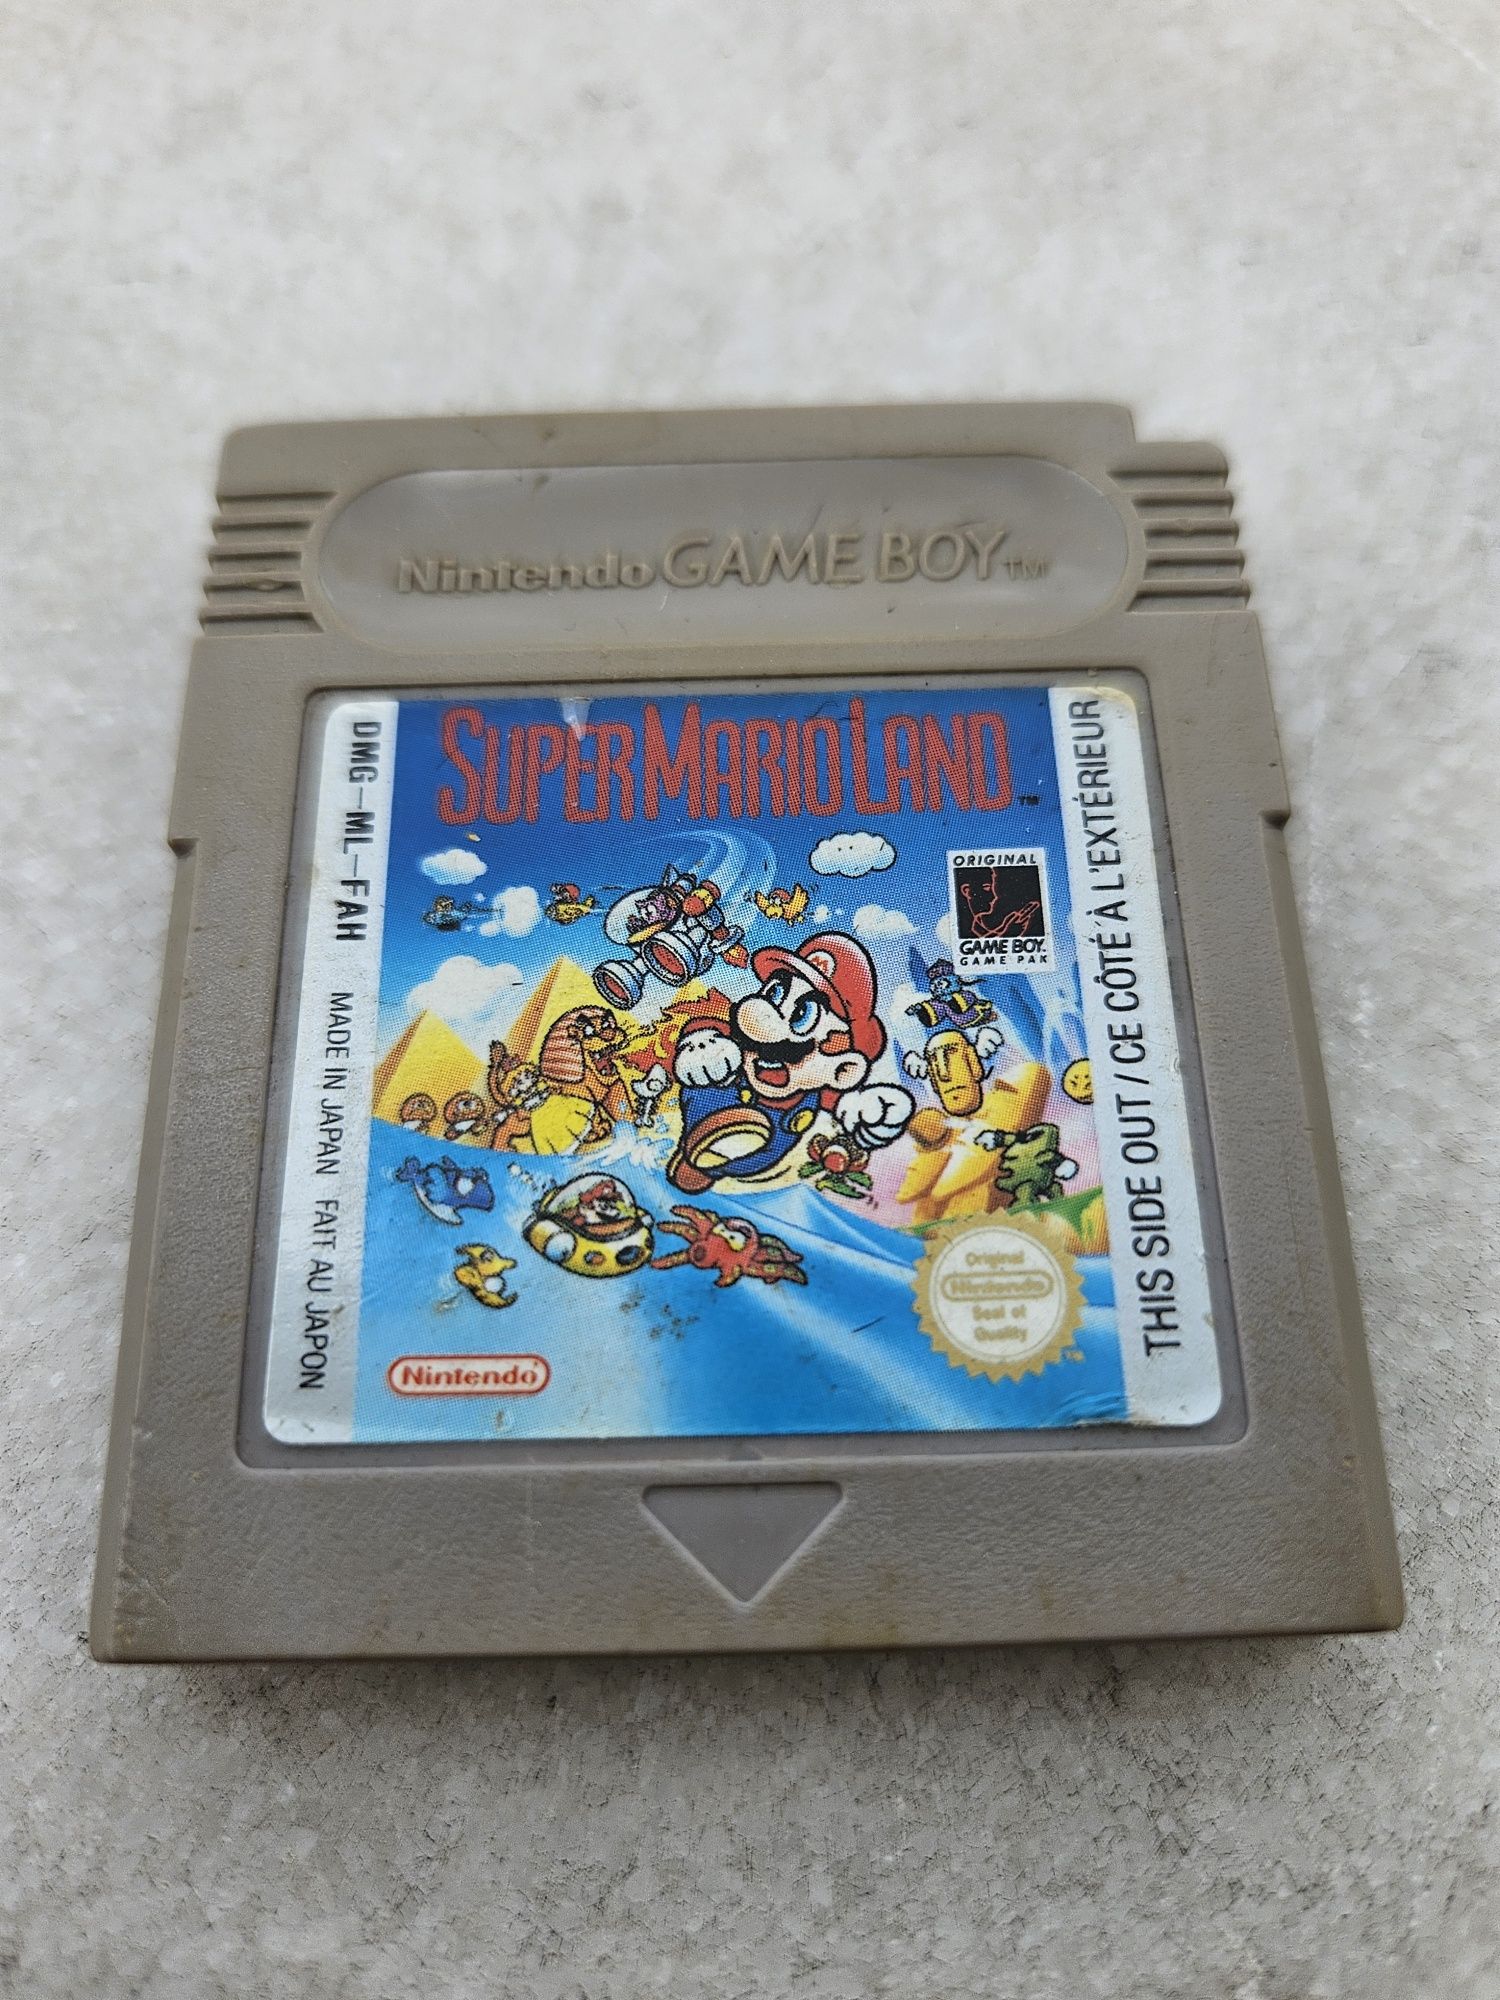 V/ jogos Gameboy Supermario Game Boy Color Advance SP

--> SupermarioL